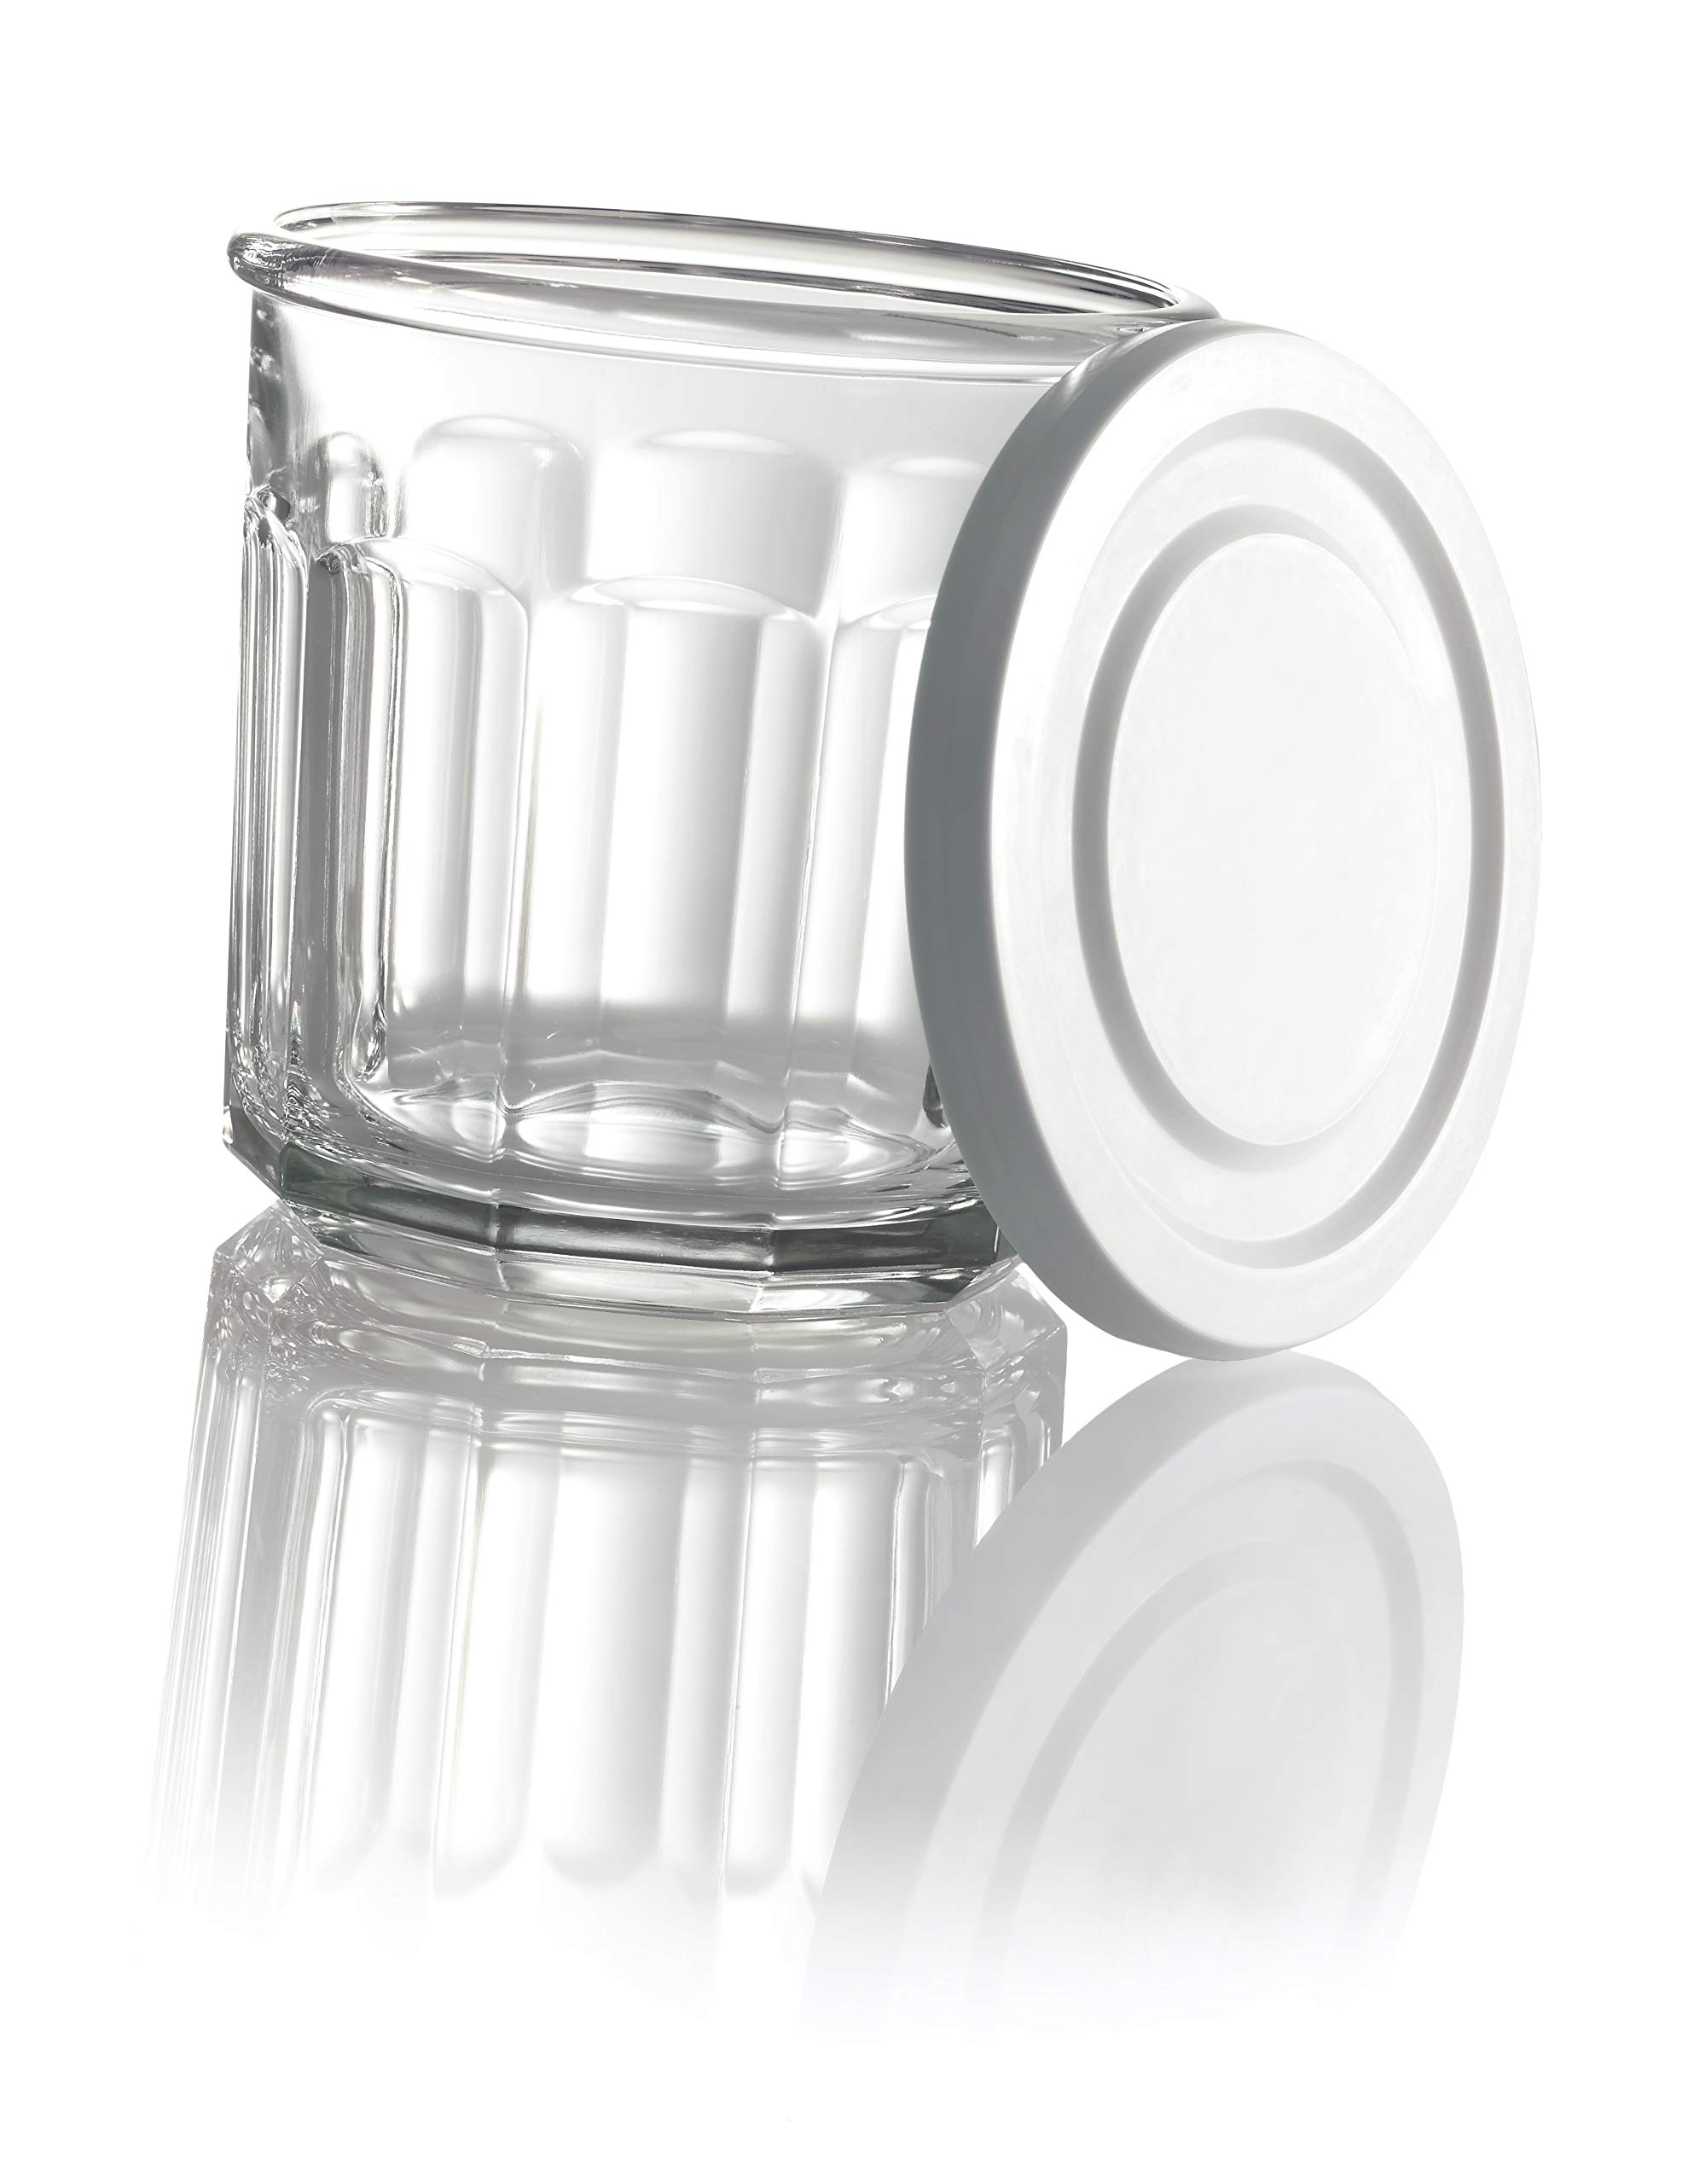 Luminarc Arc International Working Storage Jar/Dof Glass with White Lid, 14-Ounce, Set of 4 (H6812)